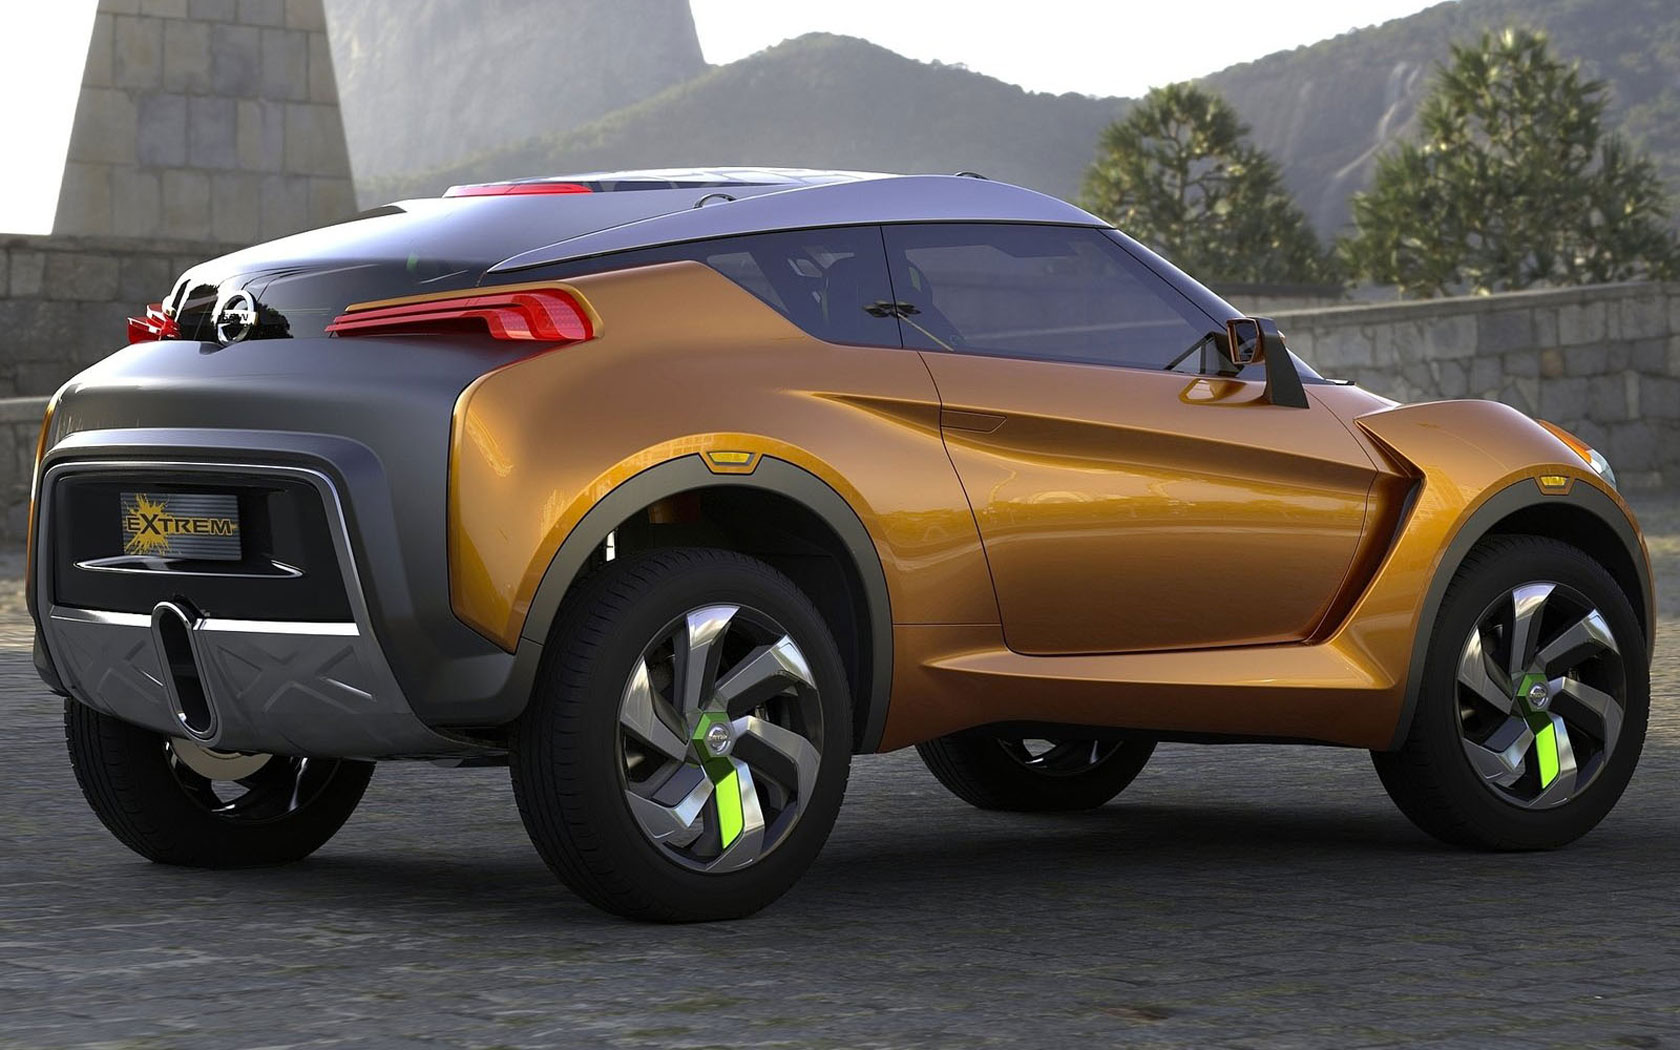  Nissan Extrem Concept 